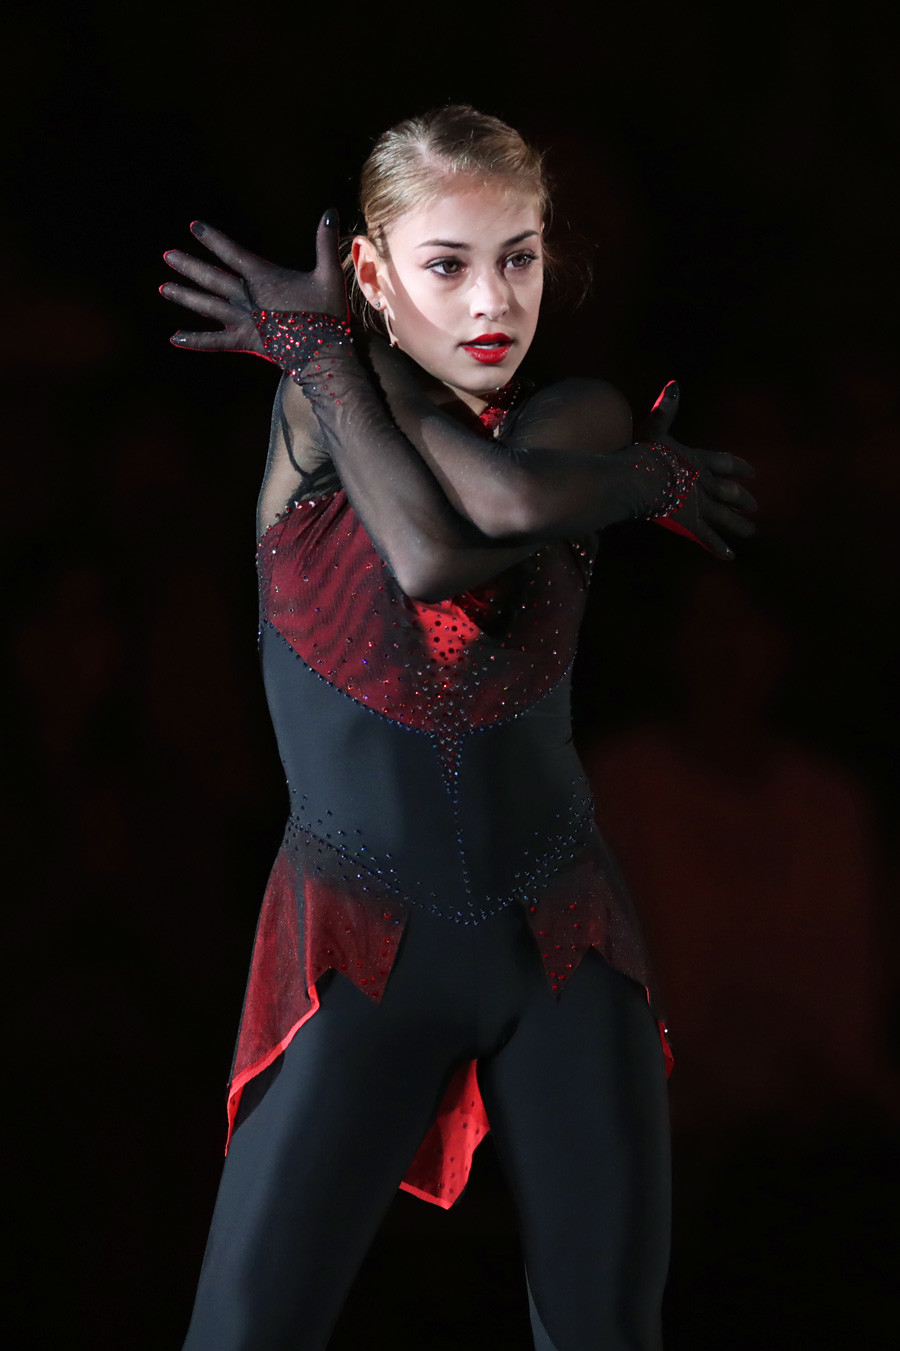 Alena Kostornaia performs during the Dream On Ice 2019 at Shinyokohama Skate Center in Kanagawa, Japan, on June 28, 2019